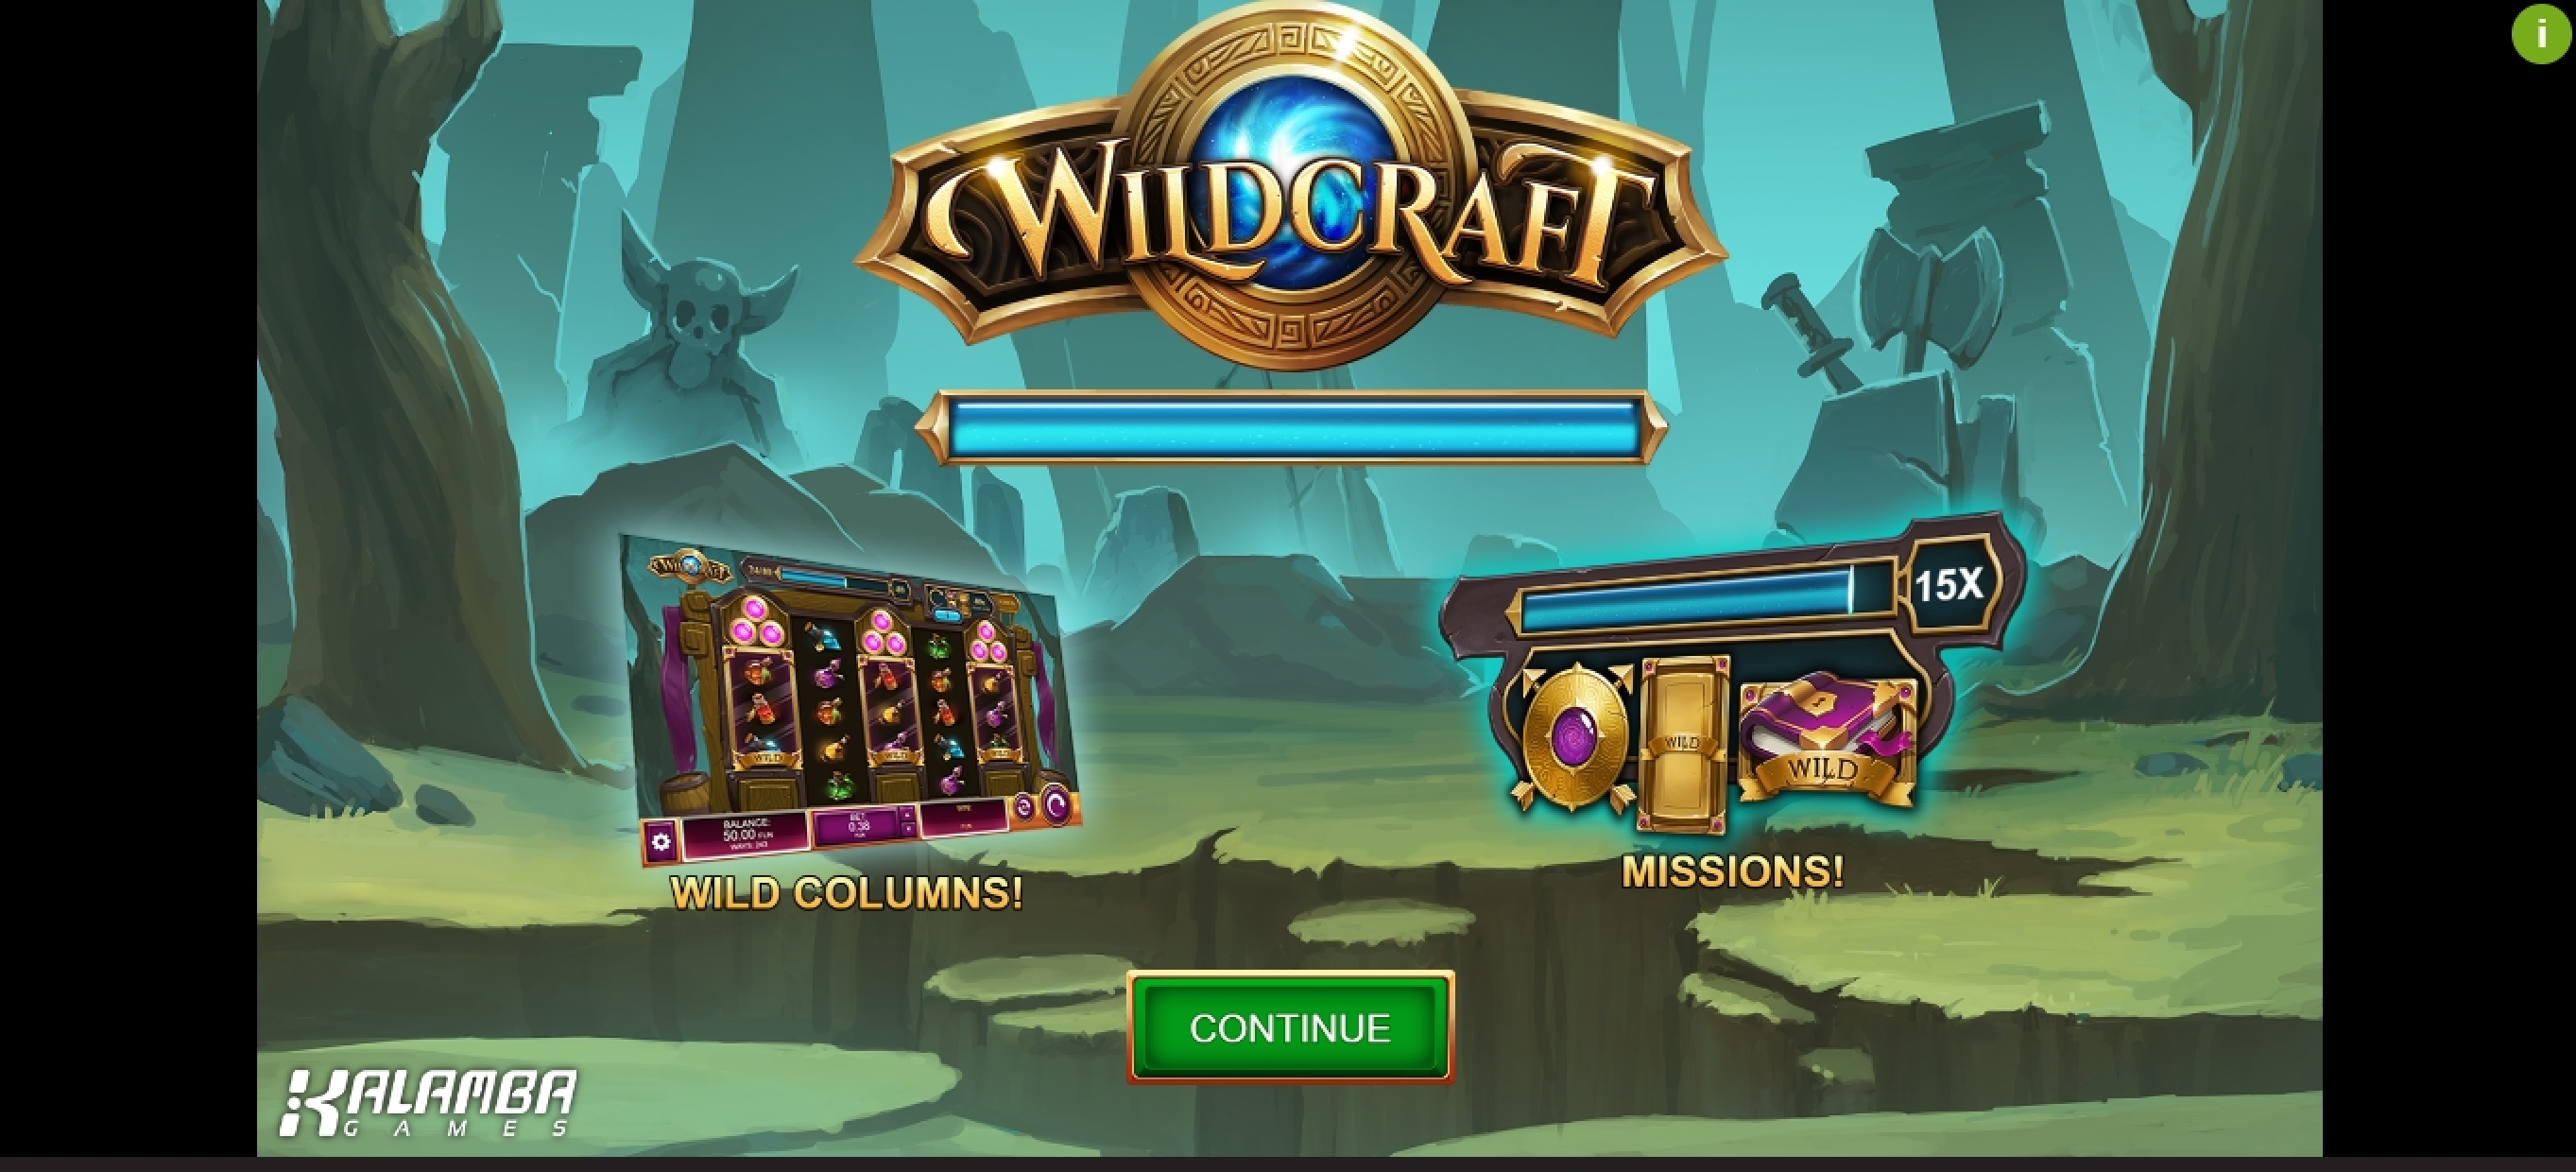 Play Wildcraft Free Casino Slot Game by Kalamba Games